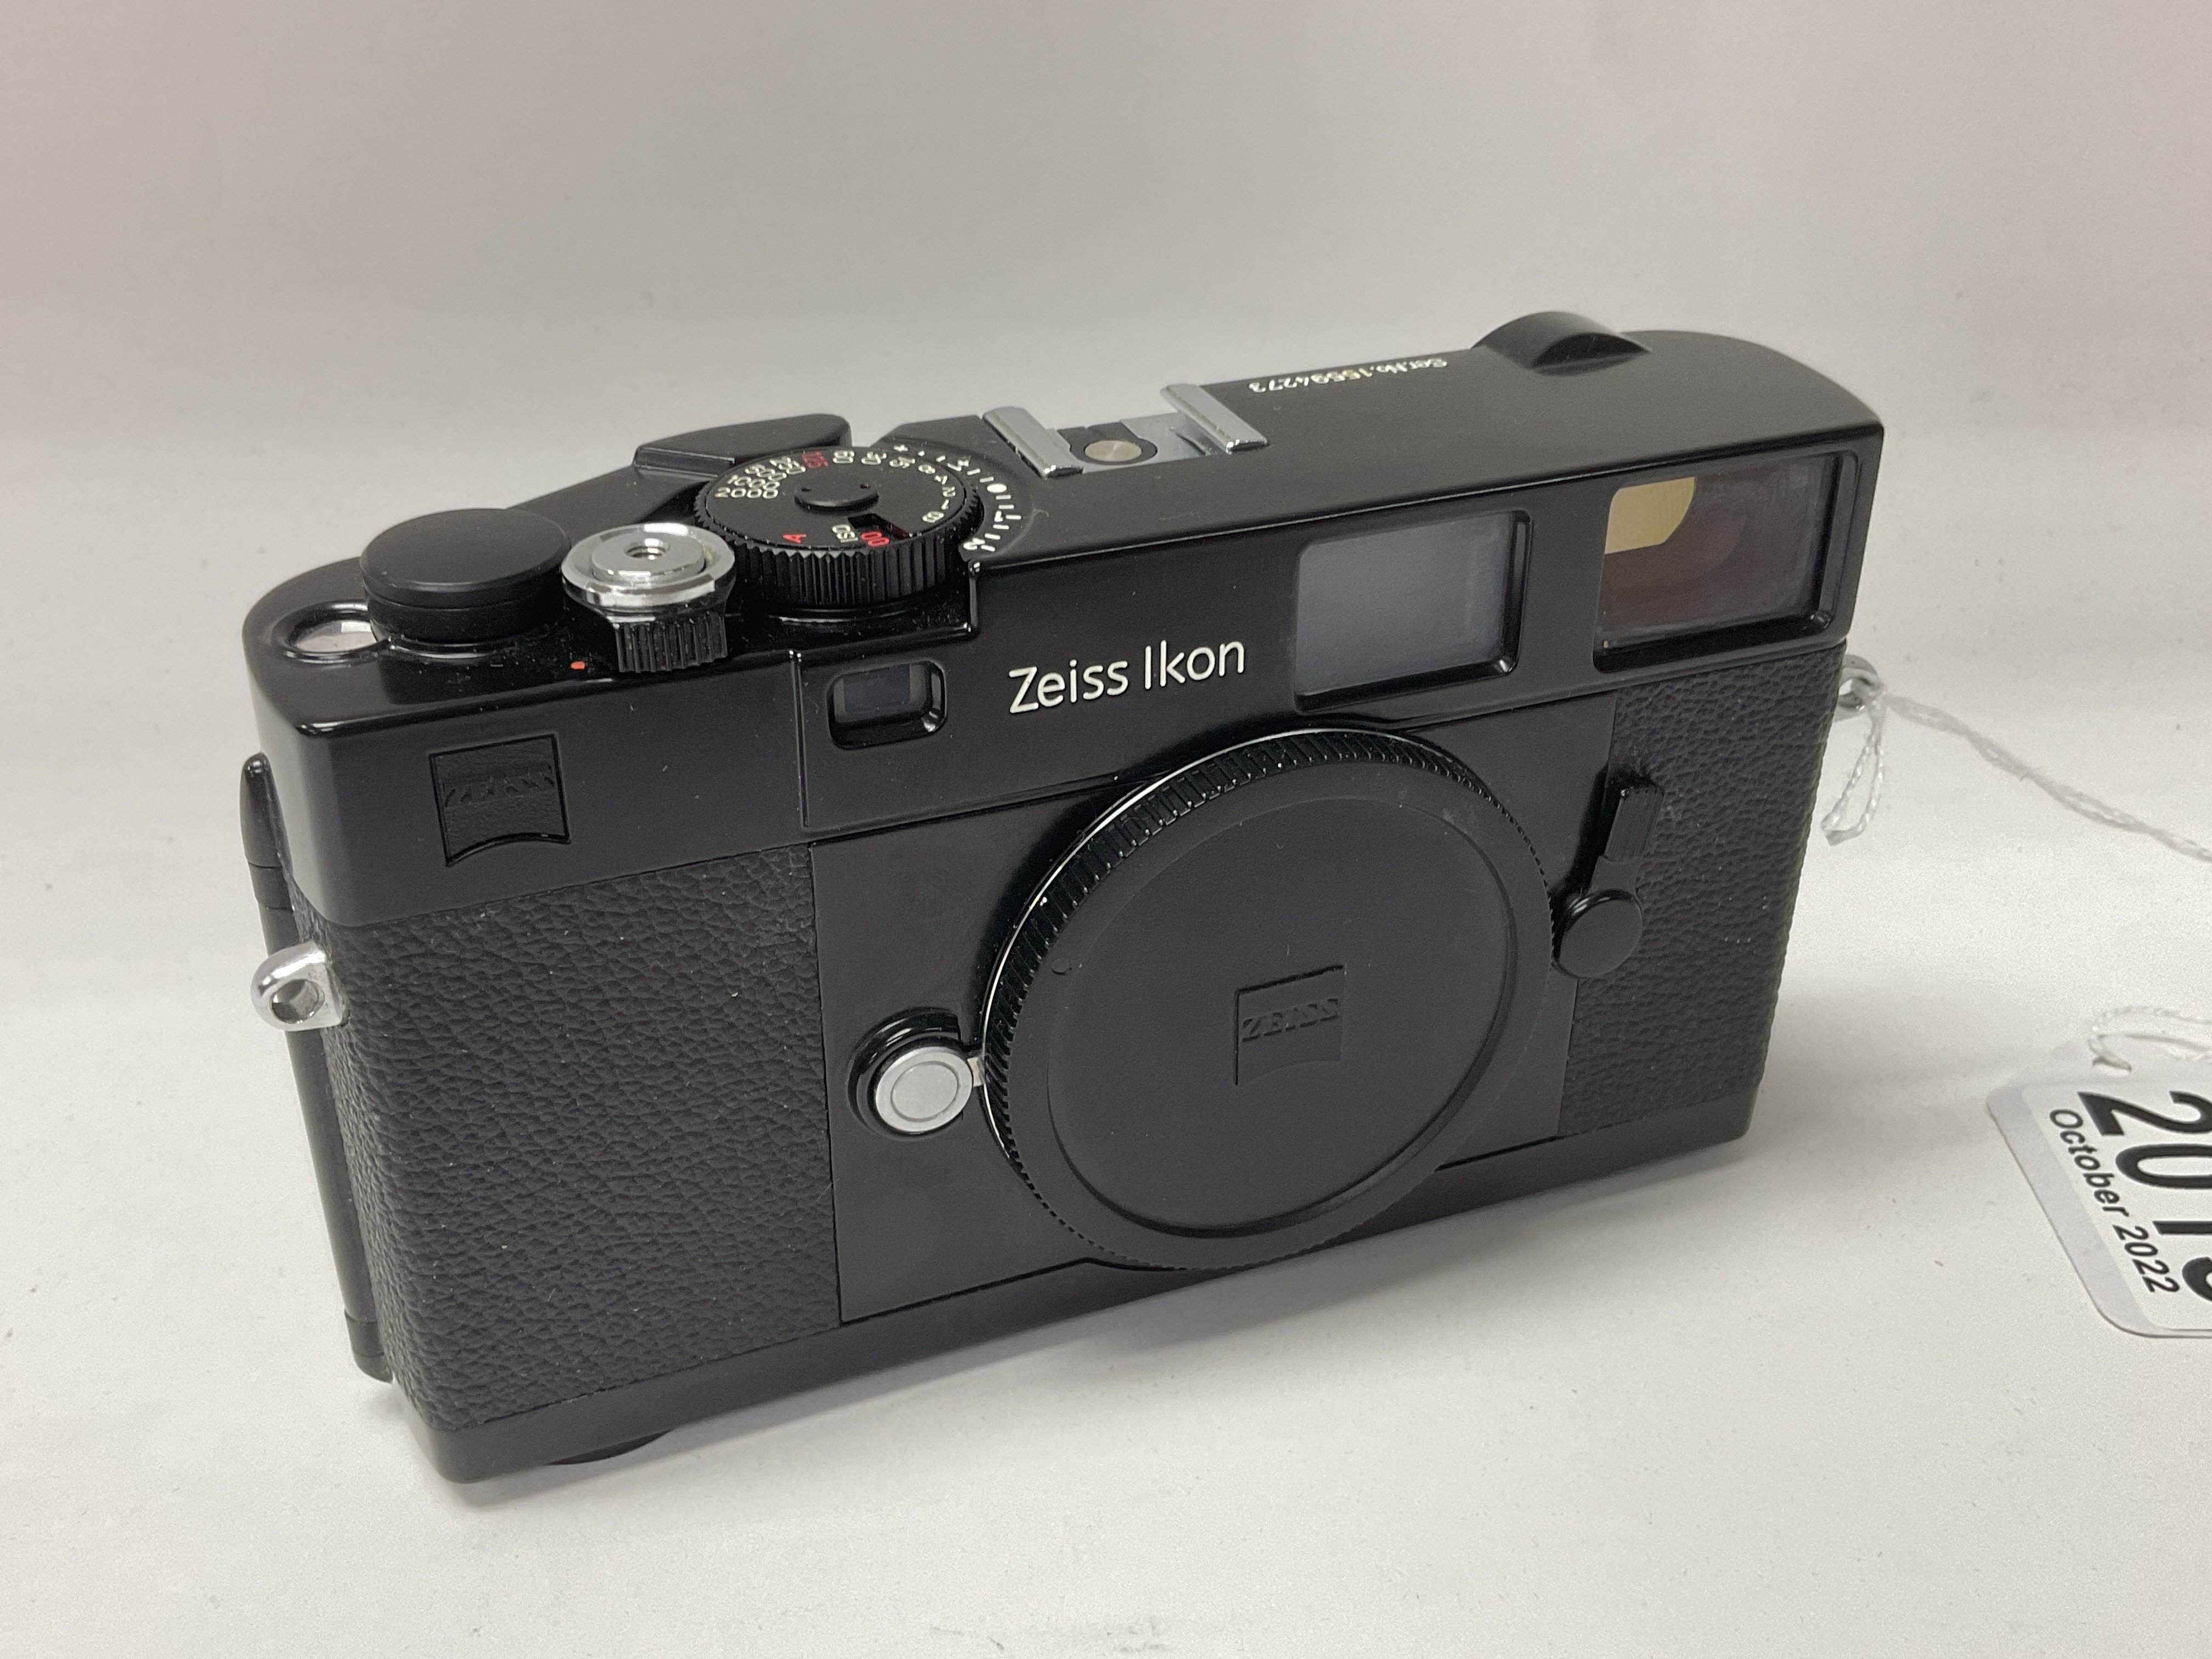 A Zeiss Ikon 35MM Rangefinder camera body, serial